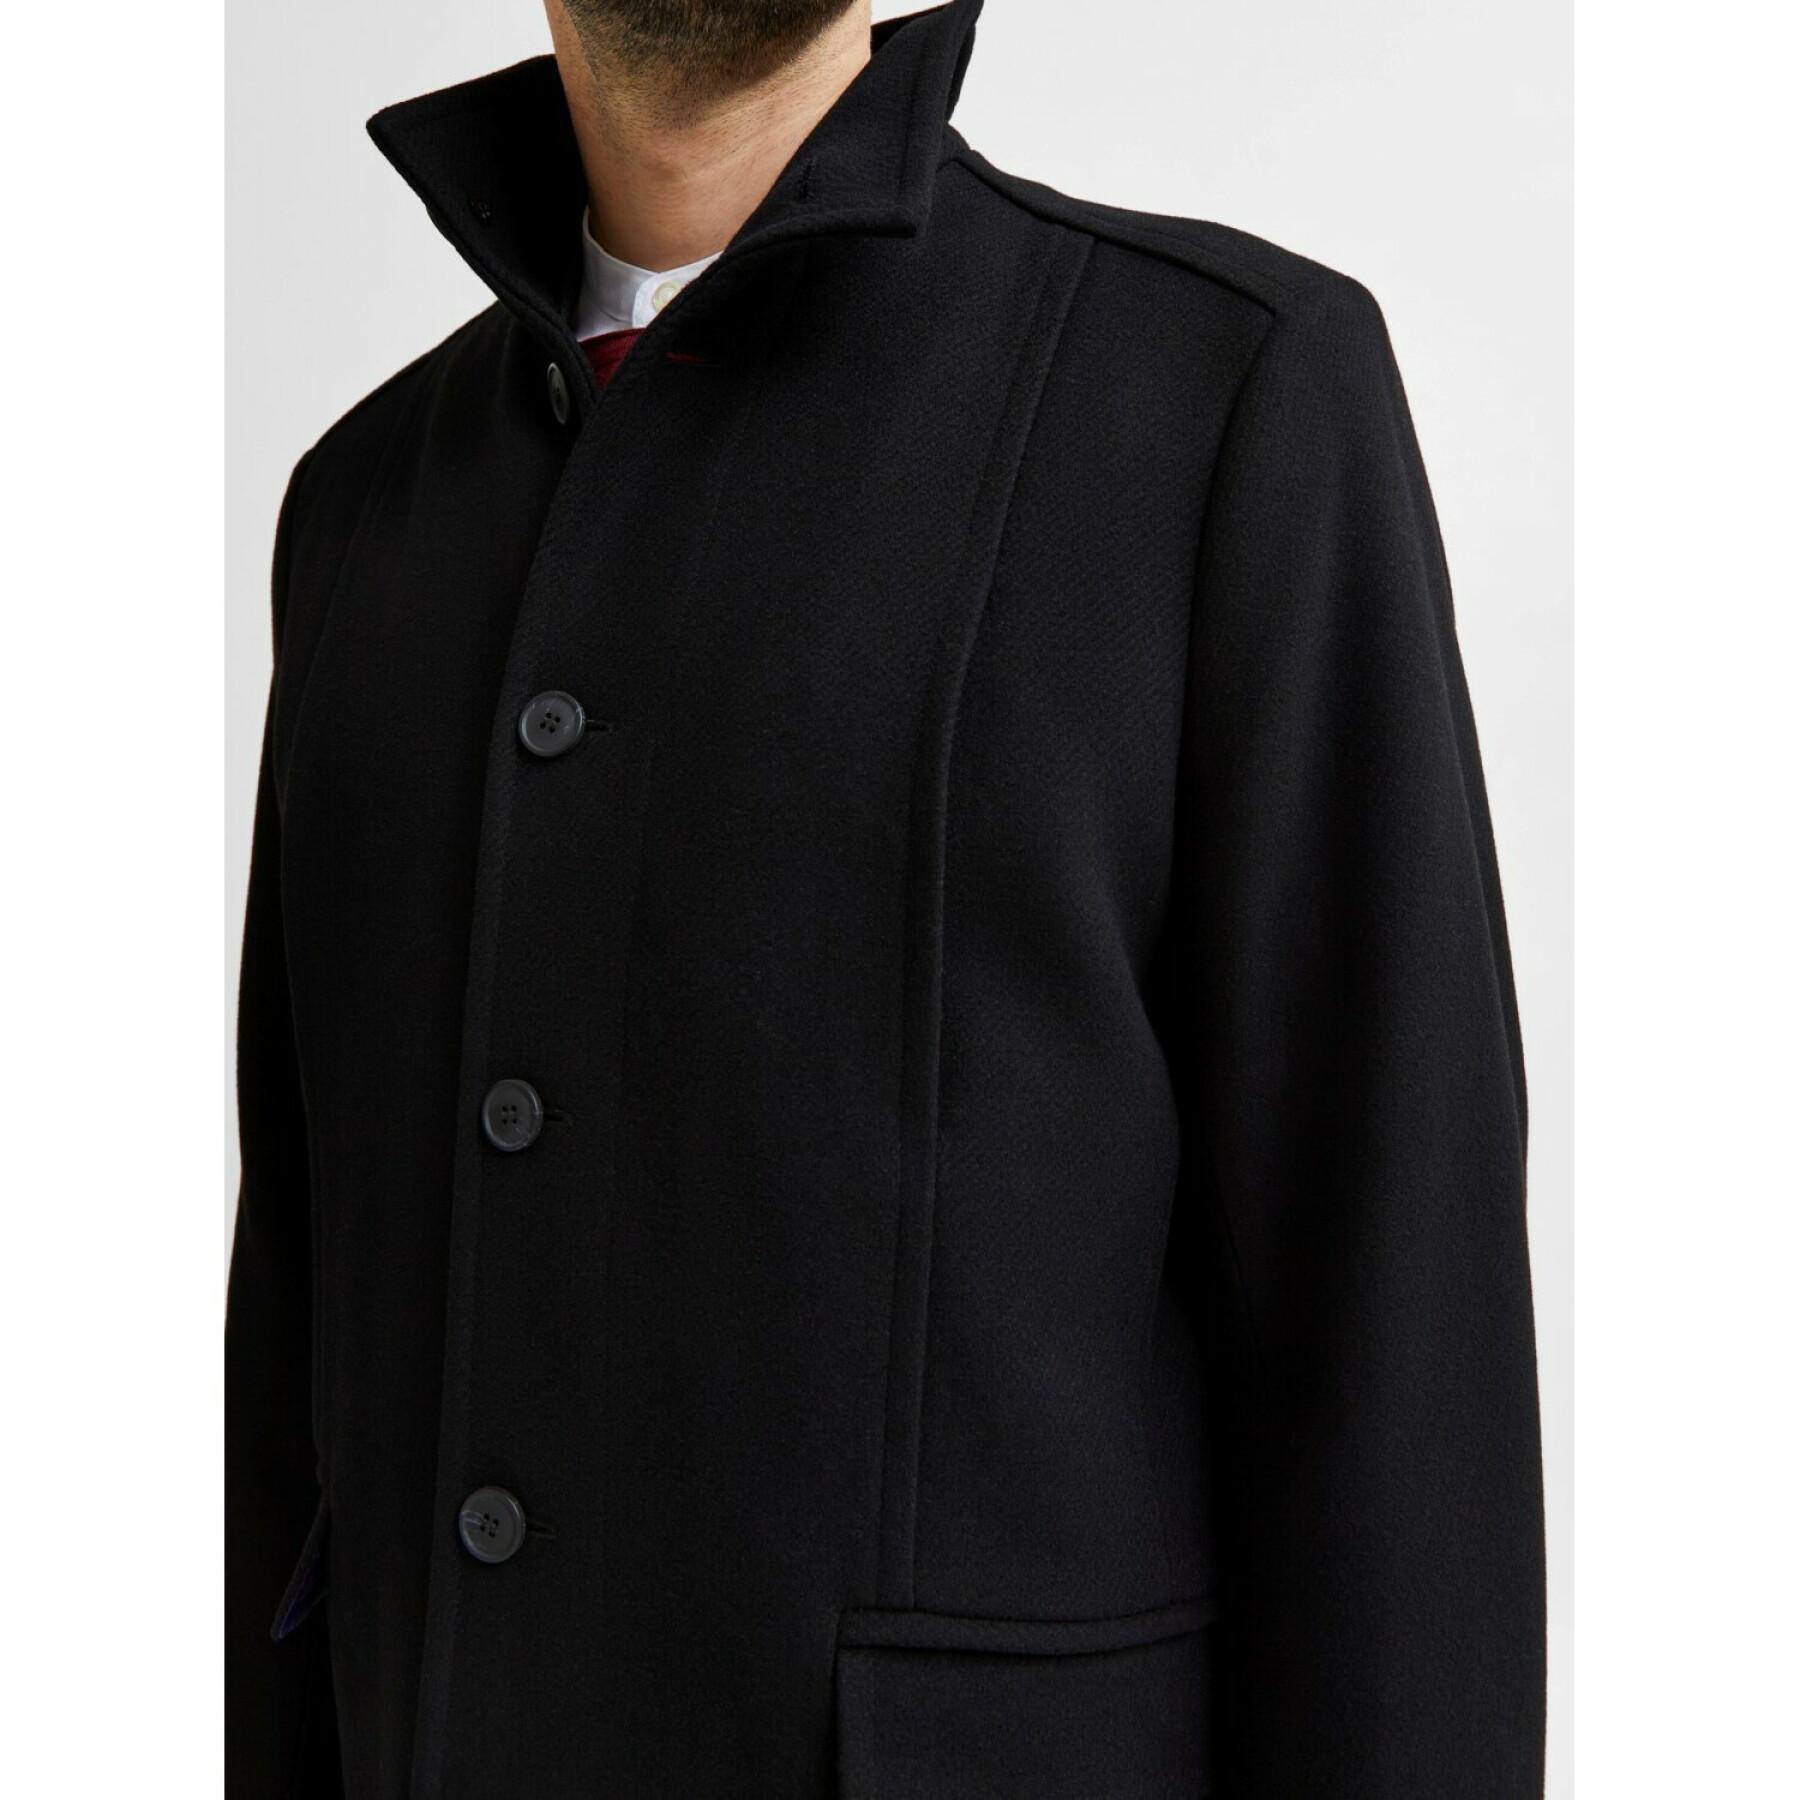 Coat Selected Morrison